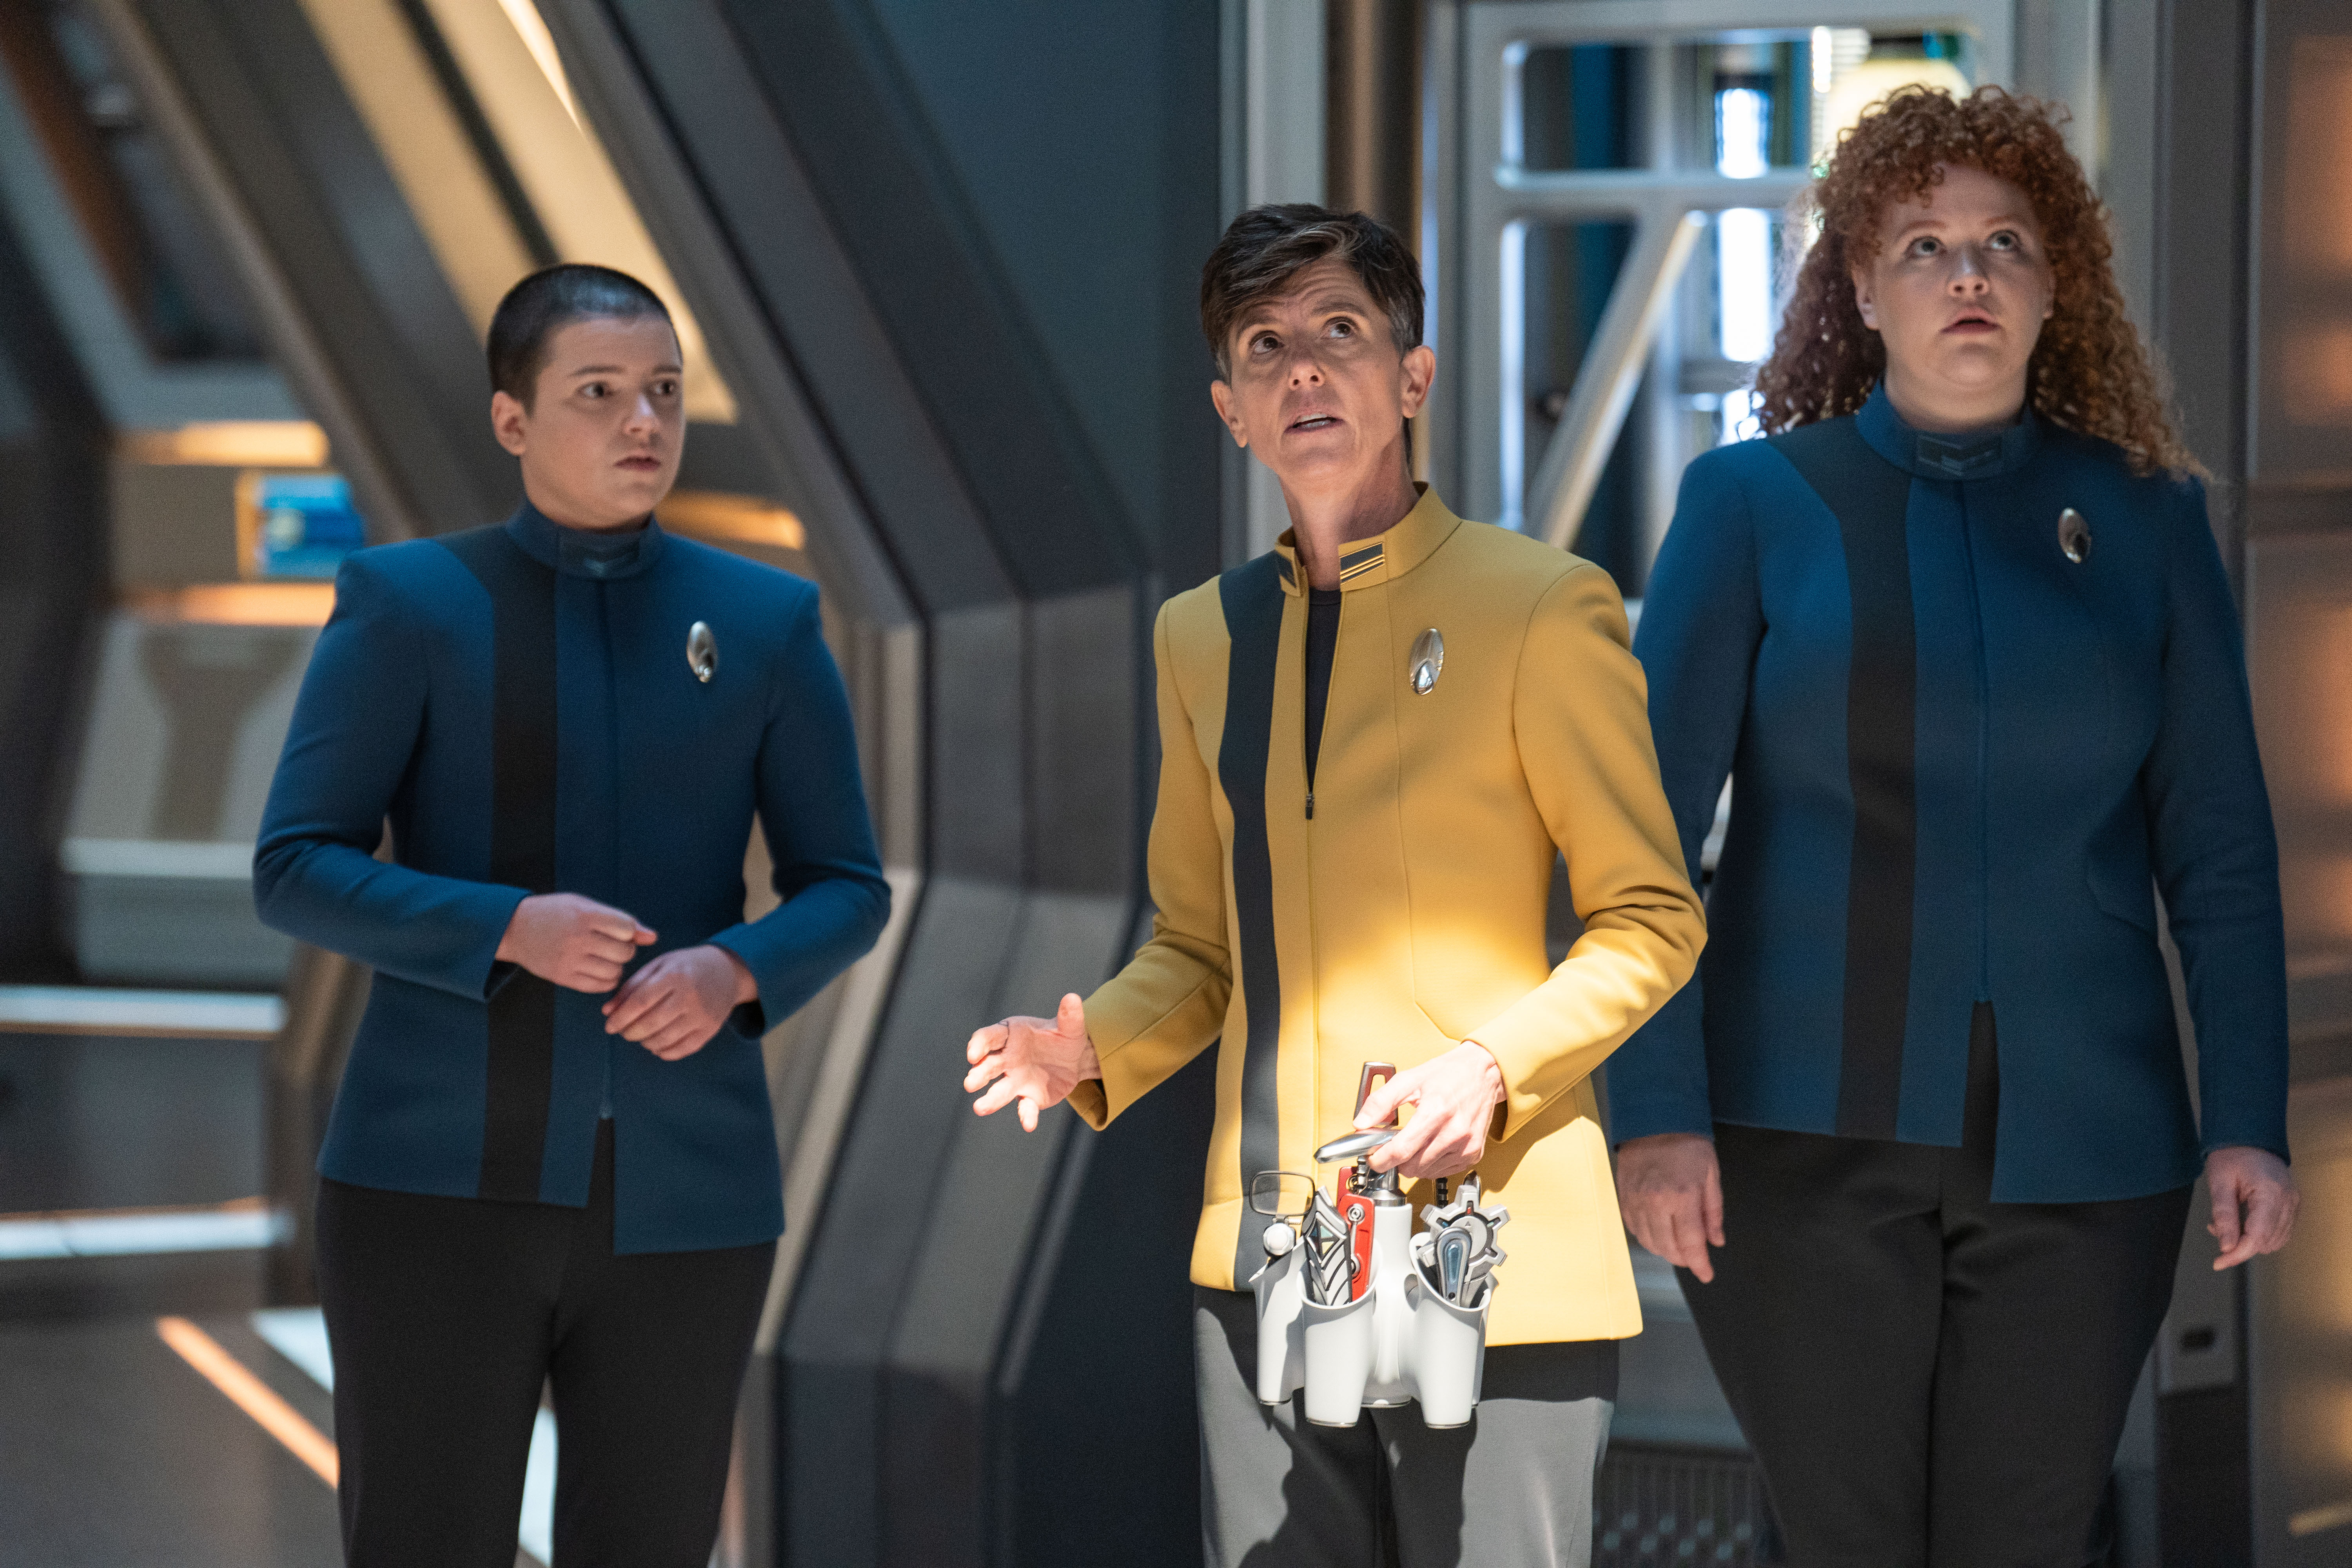 scene from a sci-fi tv show depicting three woman wearing futuristic spaceship-commander uniforms